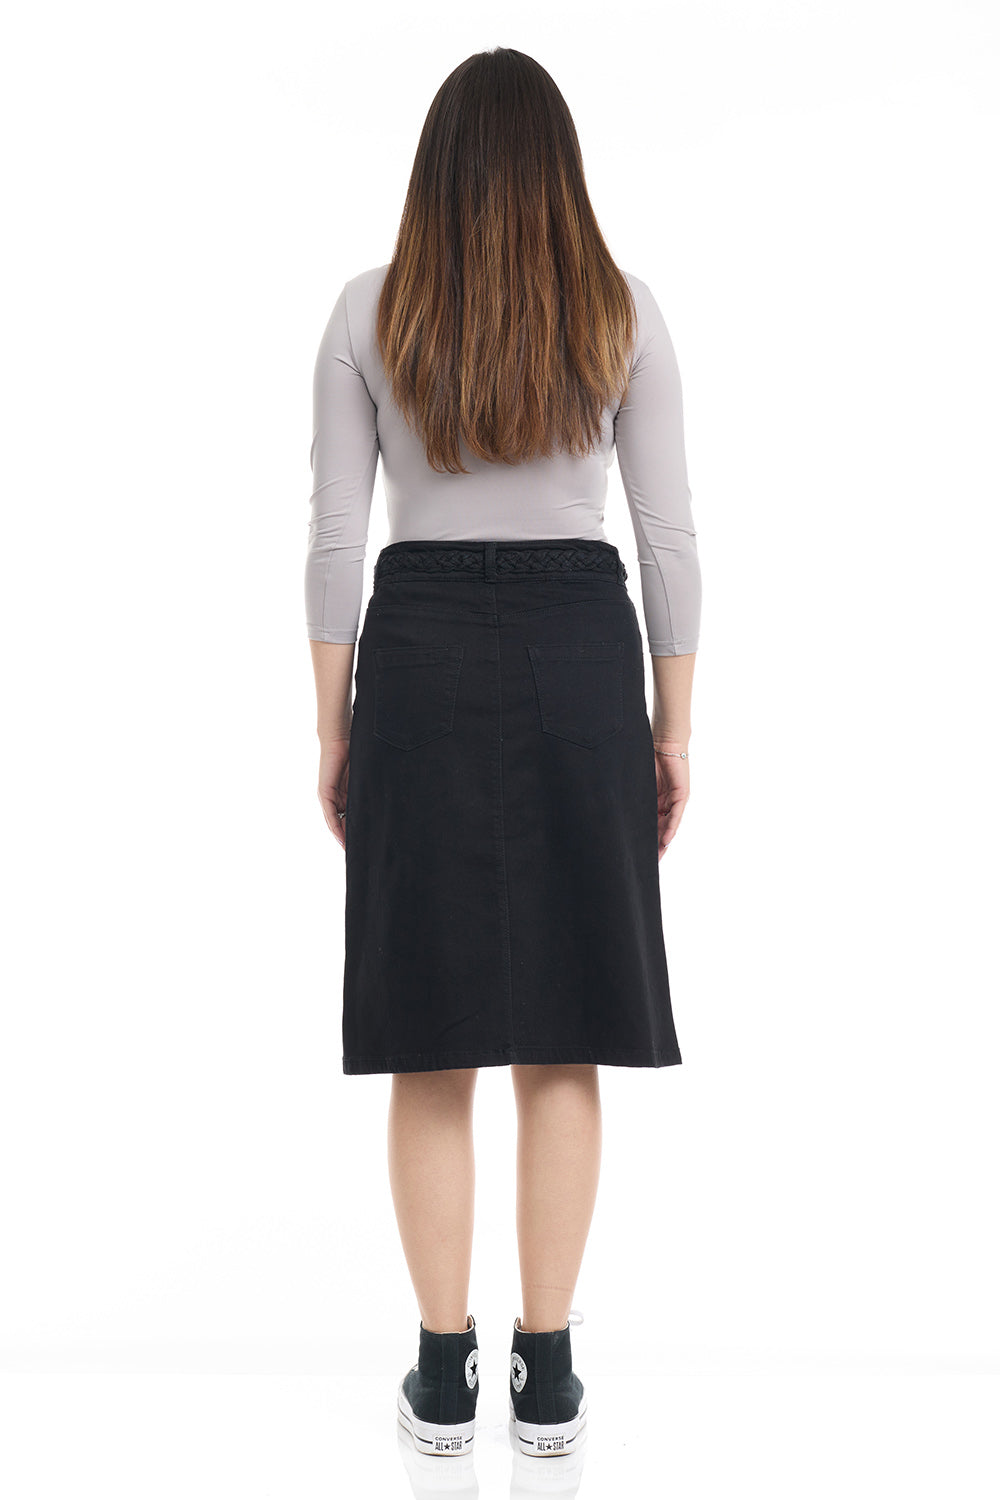 black modest 2-button and zipper closure A-line flary below the knee jean skirt 